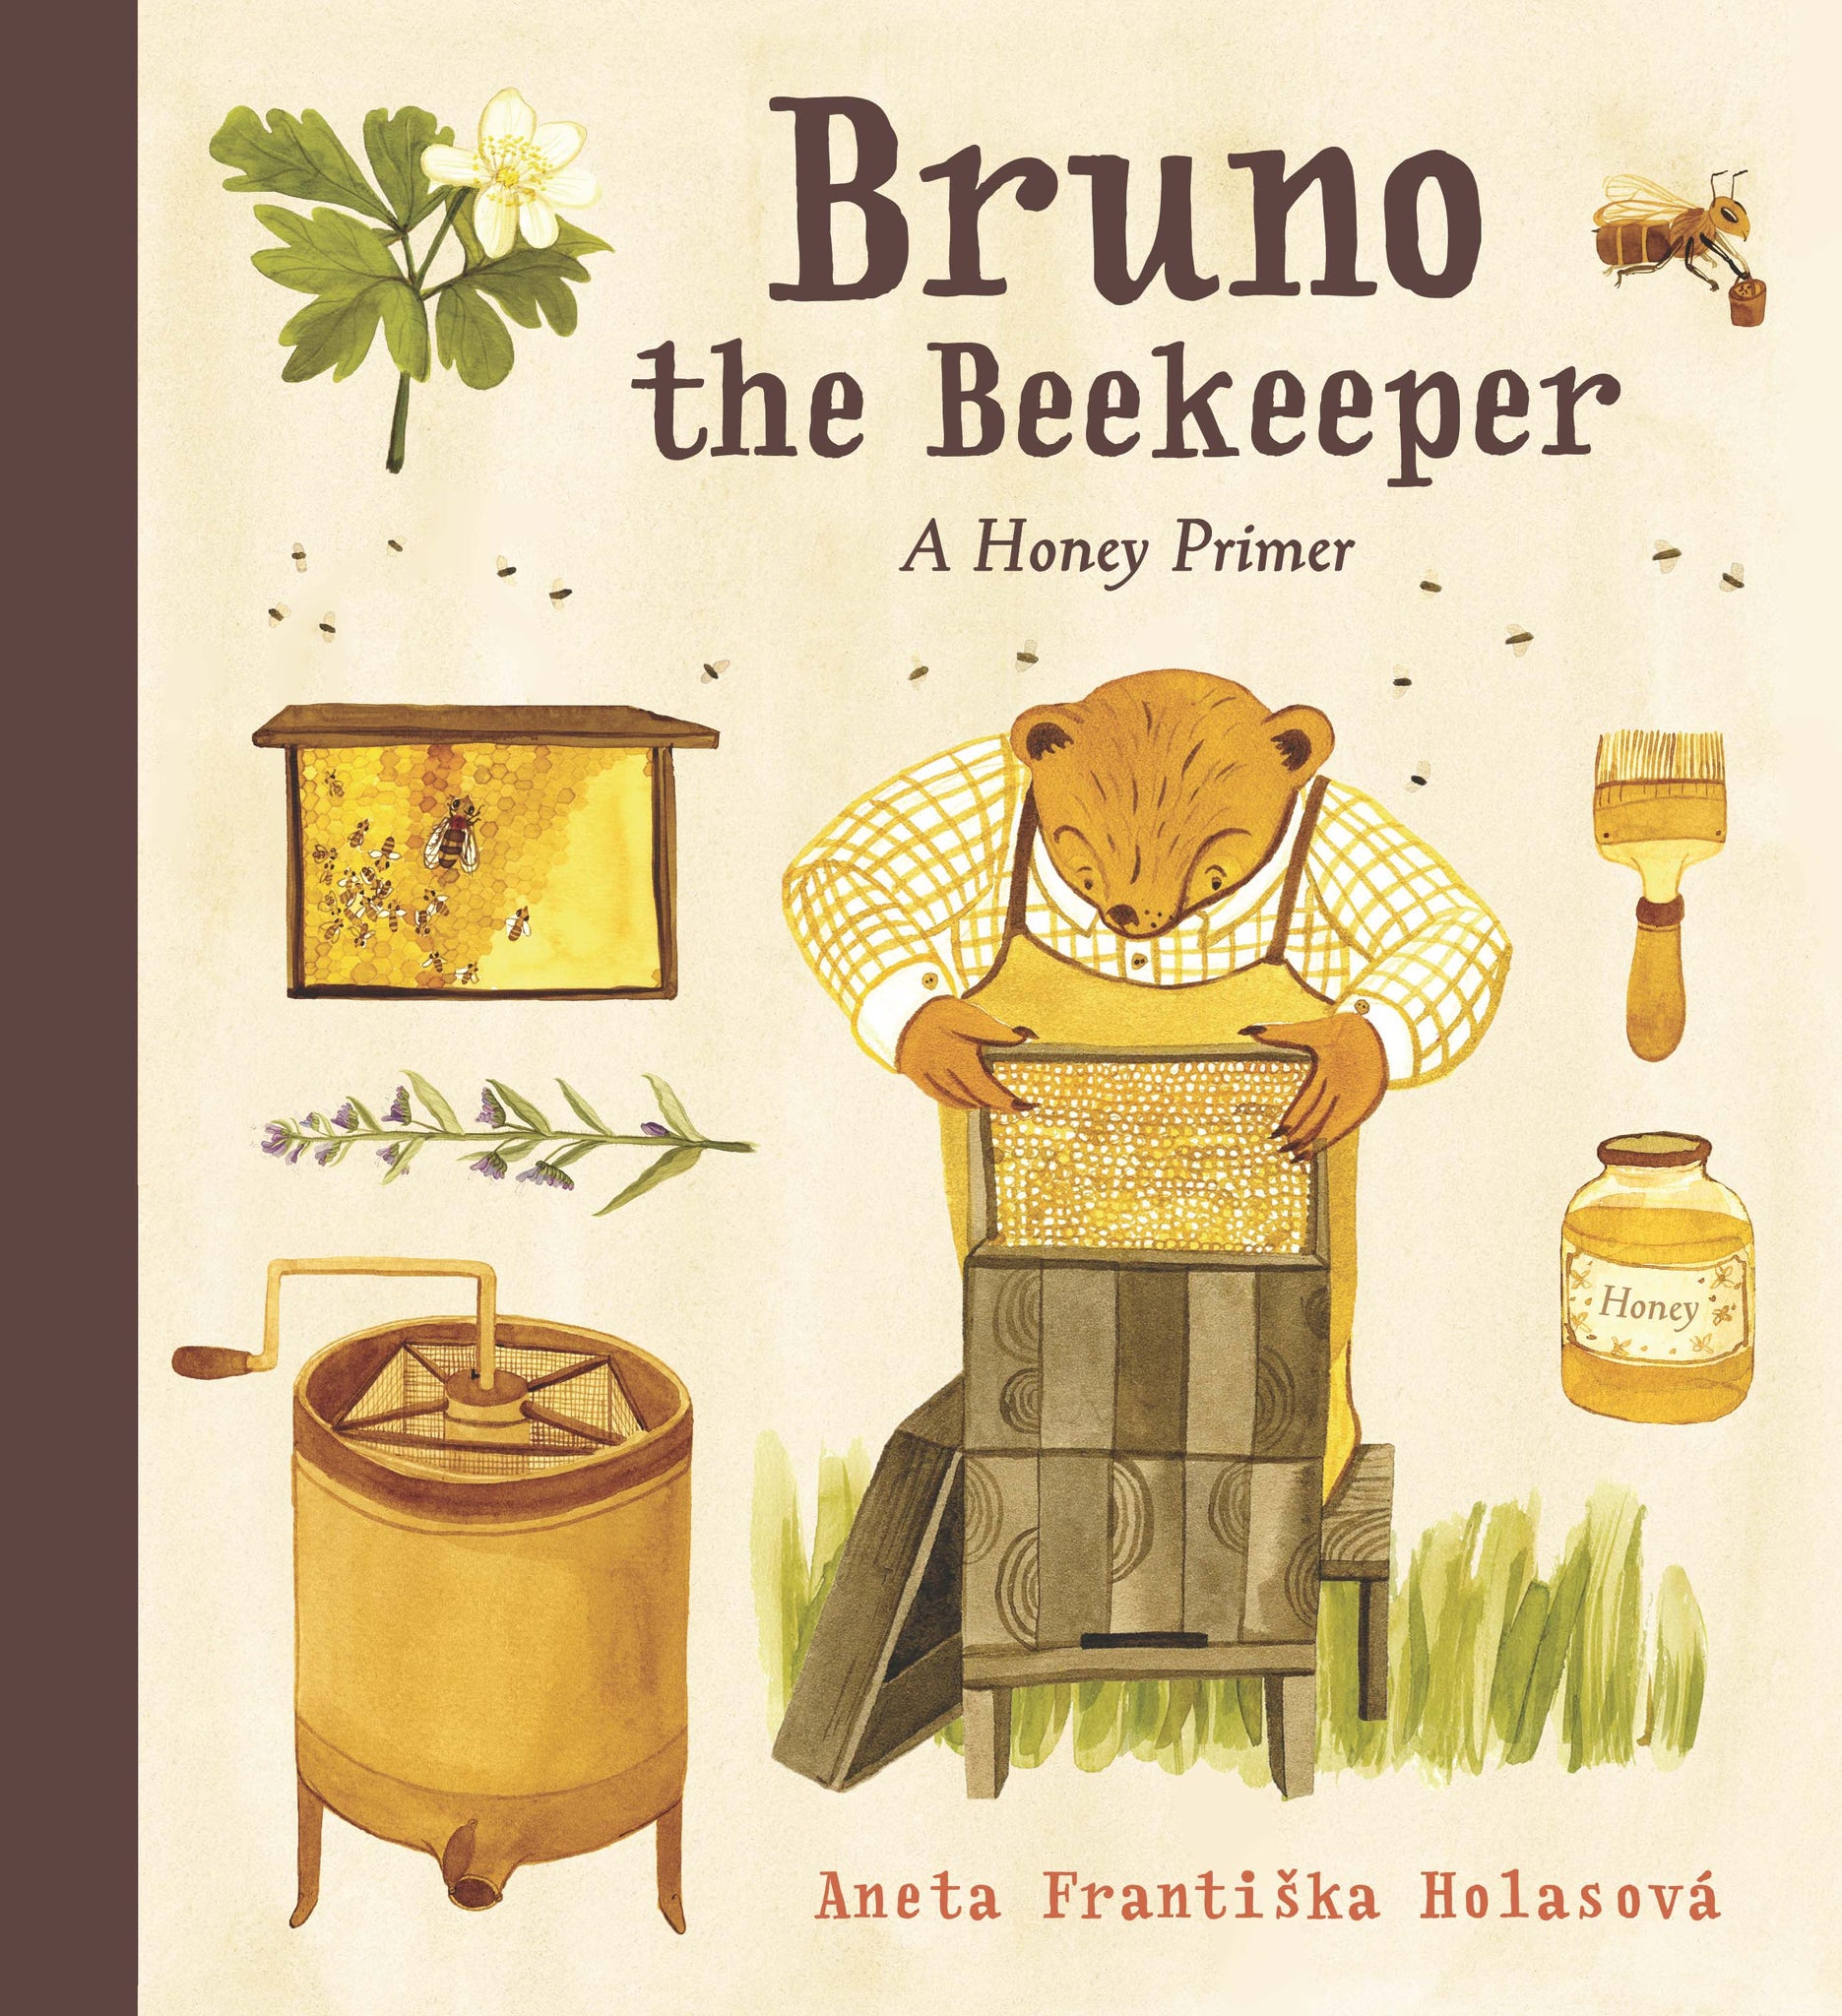 bruno the beekeeper: a honey primer